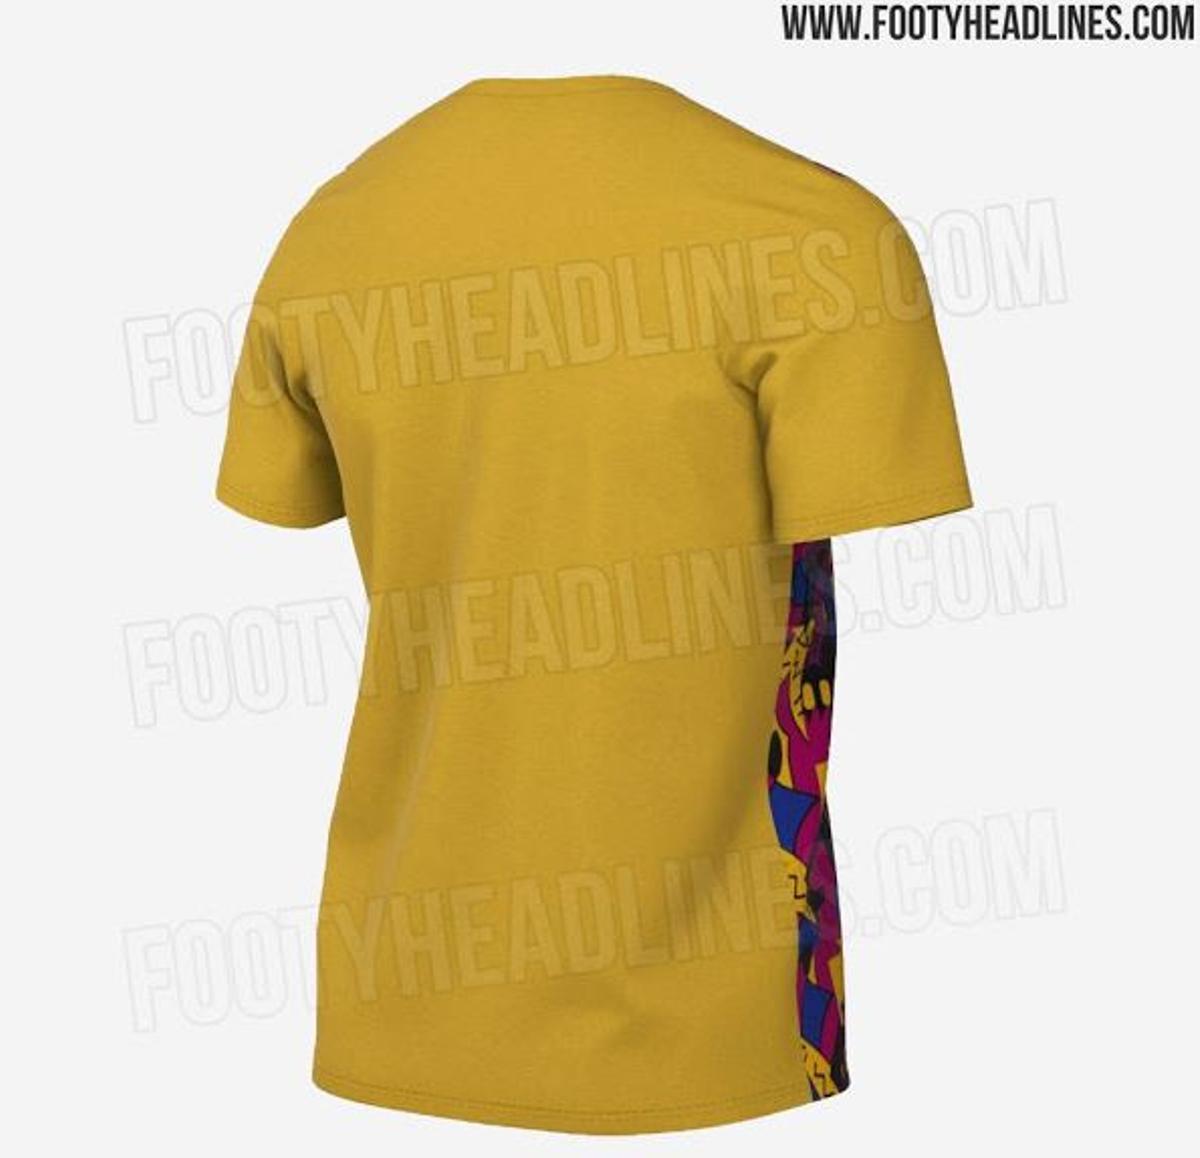 Esta será la parte trasera de la camiseta lifestyle del Barça la próxima temporada